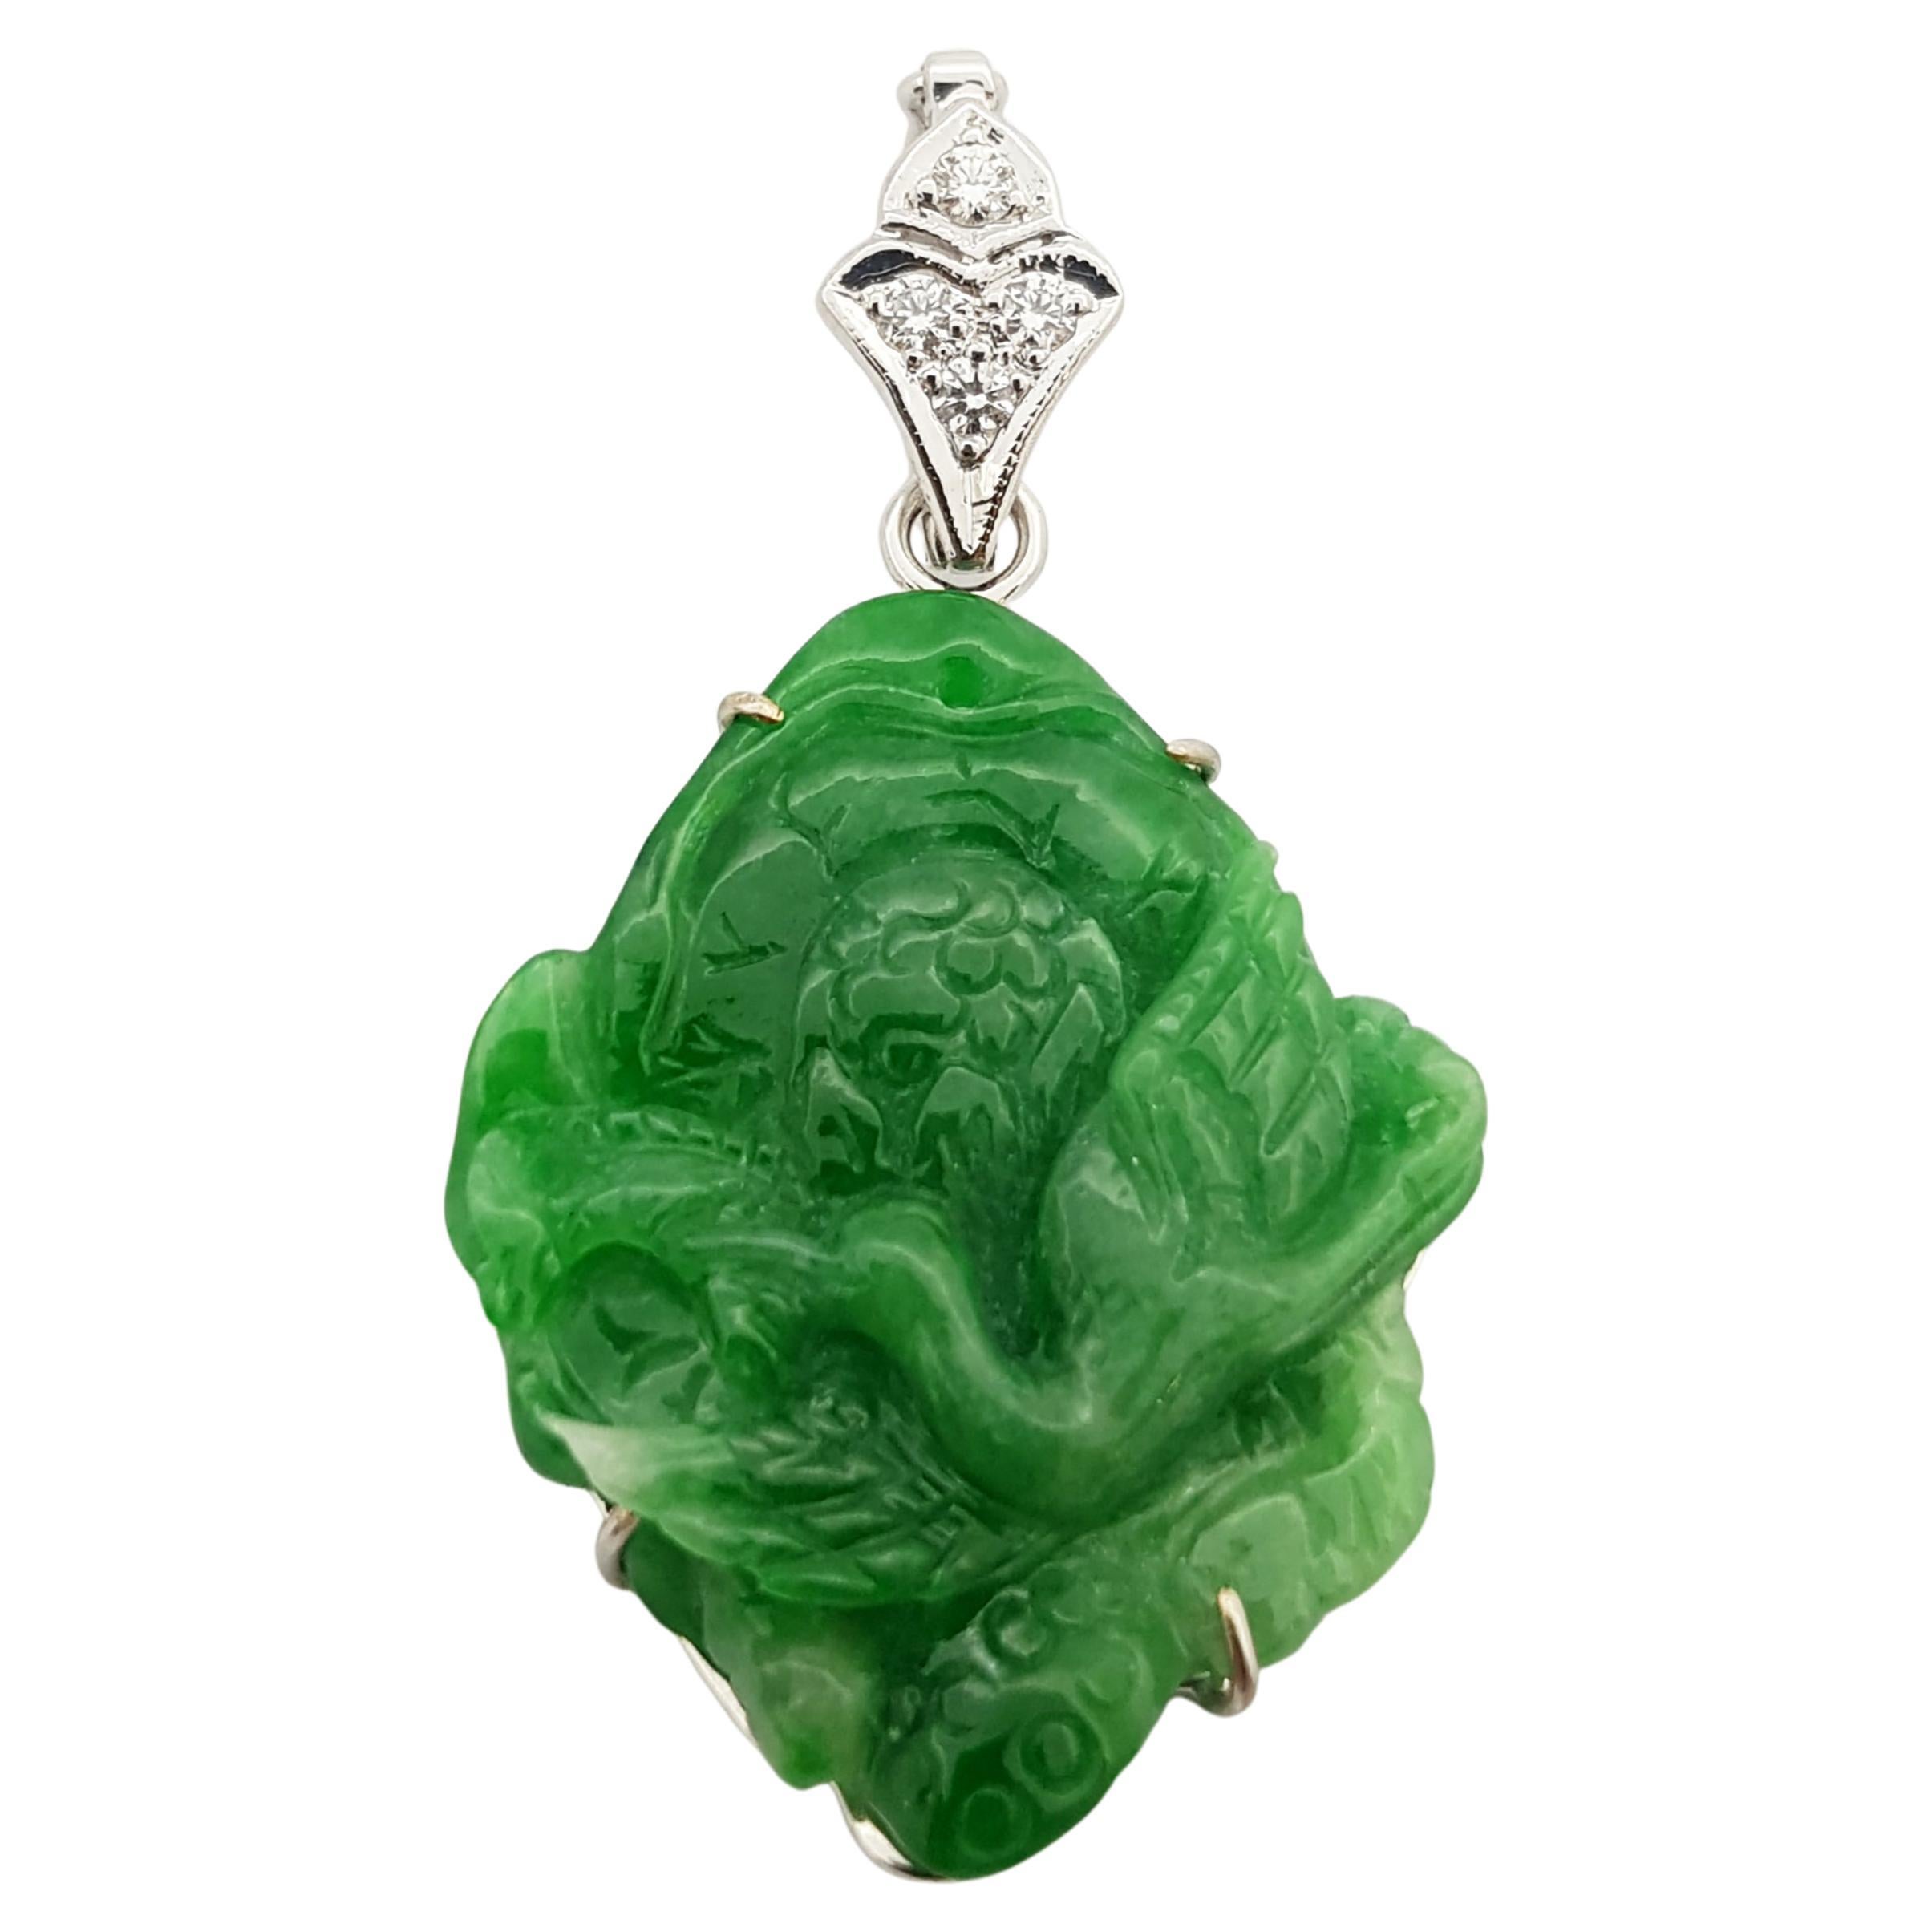 Carved Jade with Diamond Pendant Set in 18 Karat White Gold Settings